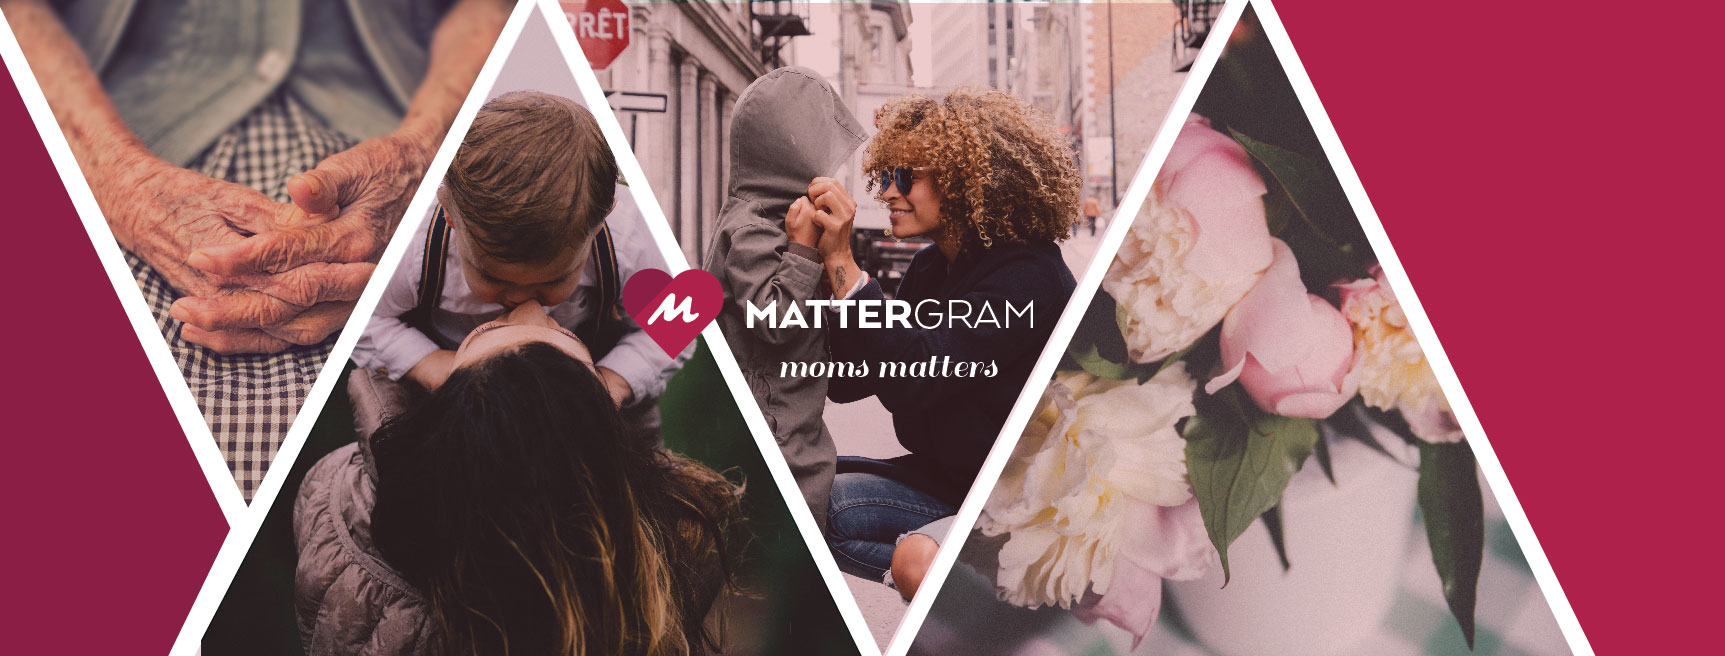 Mattergram_MothersDay_Facebook_Cover.jpg